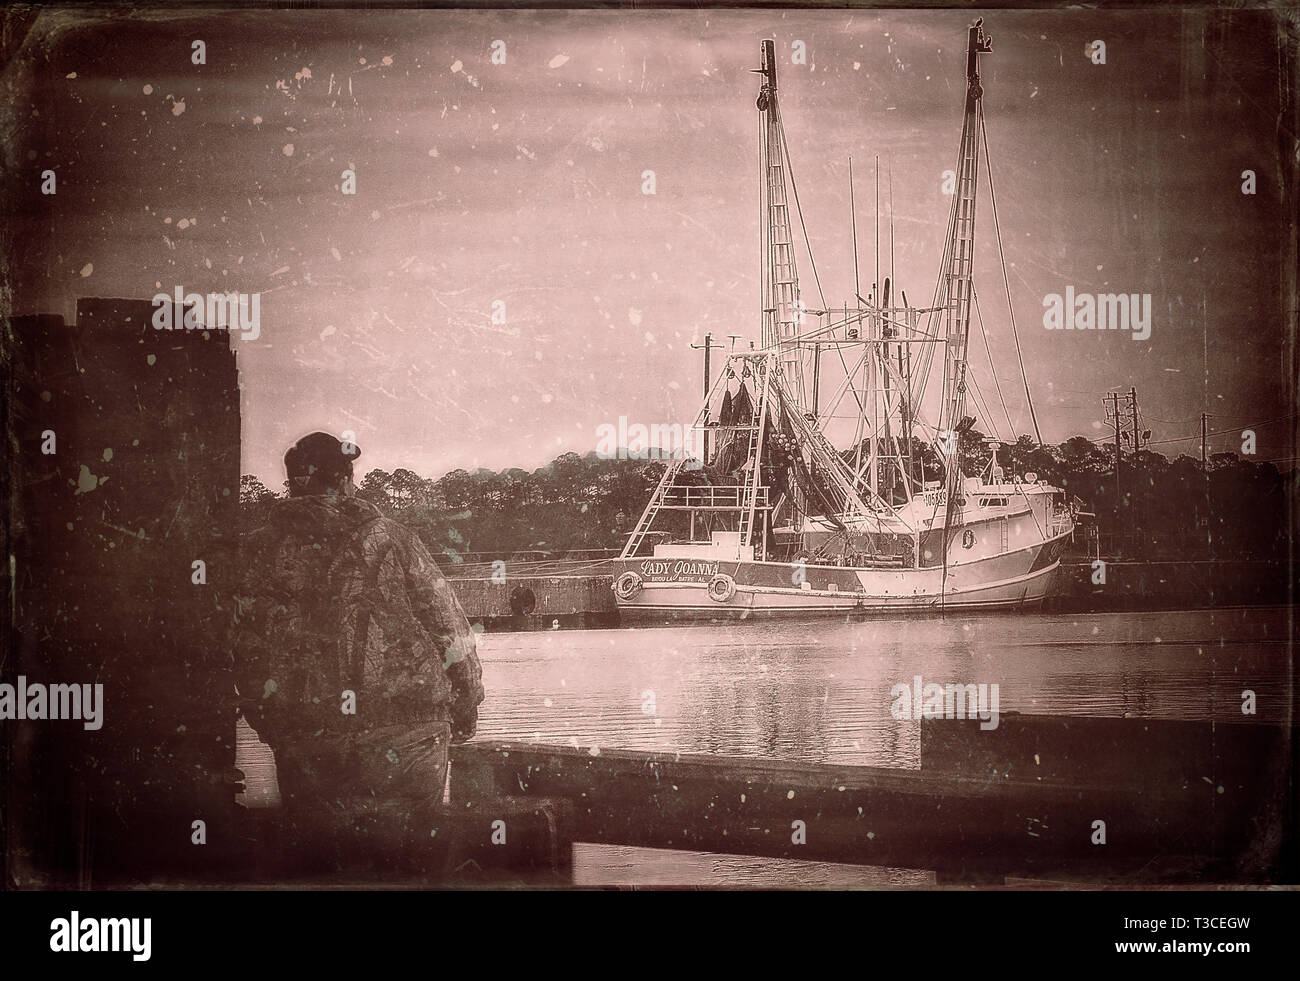 A man stares out at Lady Joanna, a shrimp boat, January 5, 2016, in Bayou La Batre, Alabama. Stock Photo